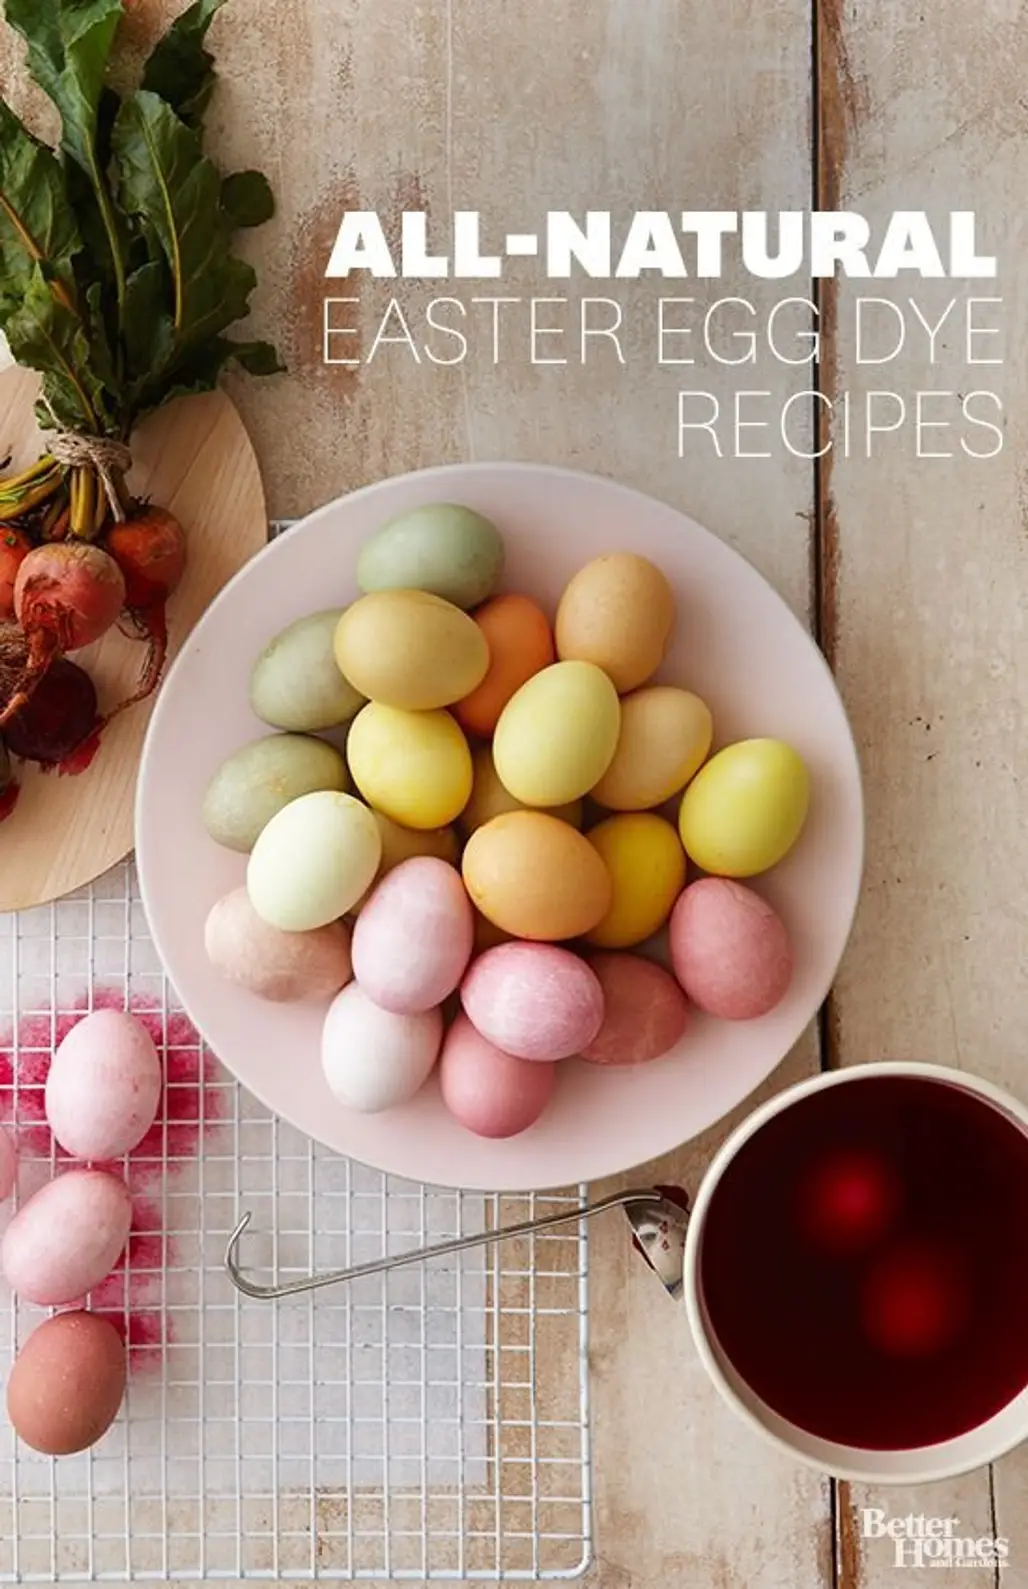 All-natural Dye Recipe for Easter Eggs